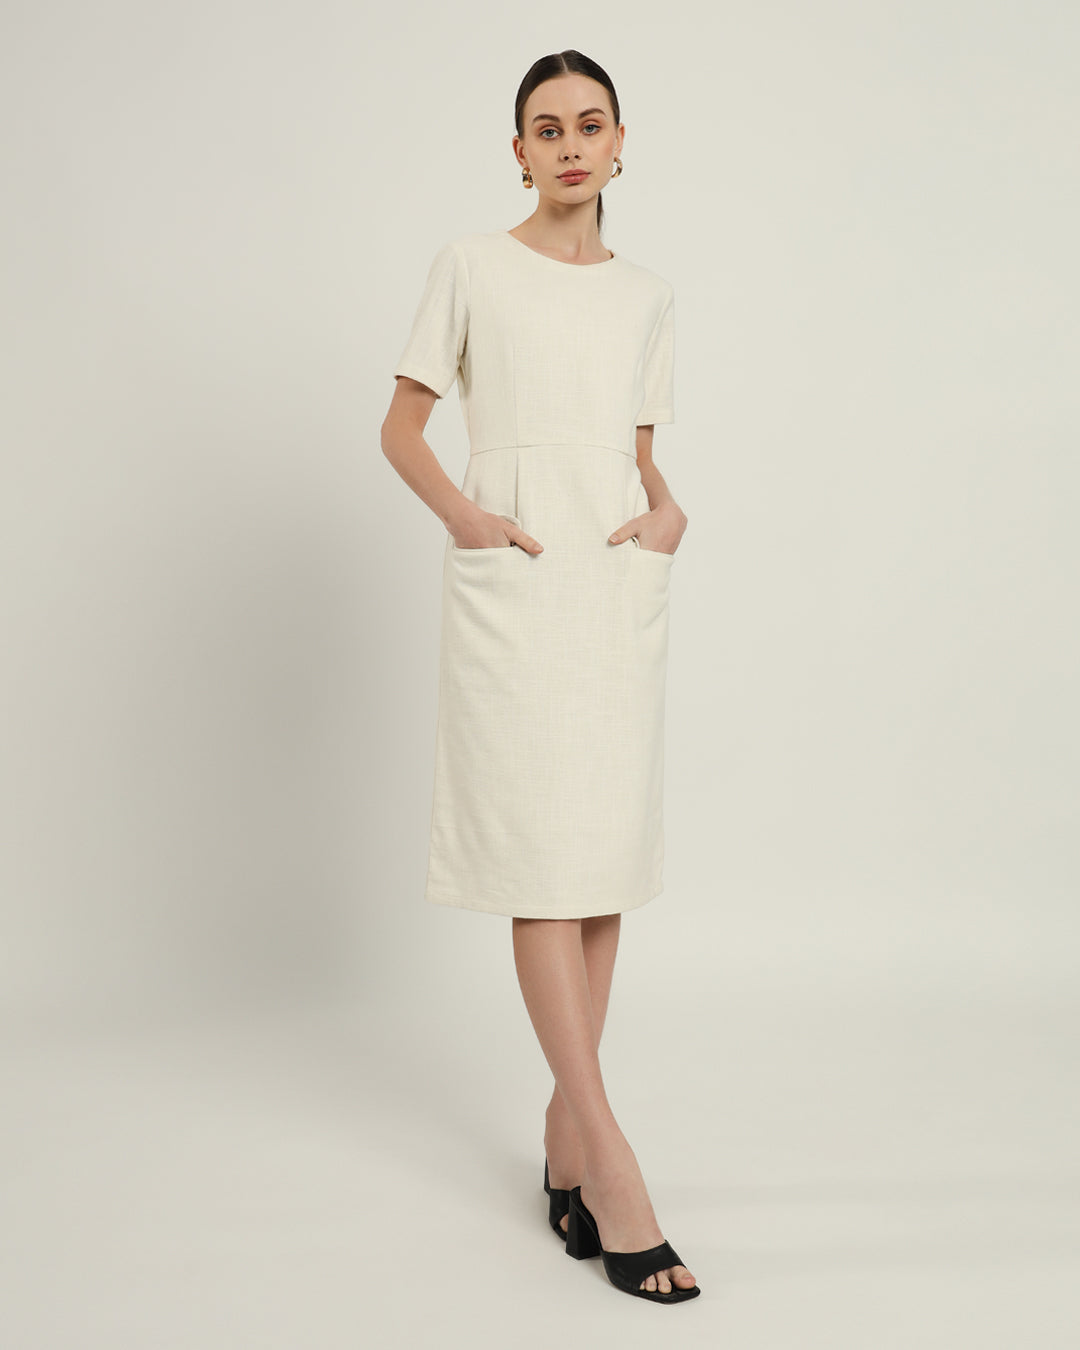 The Cairo Daisy White Linen Dress